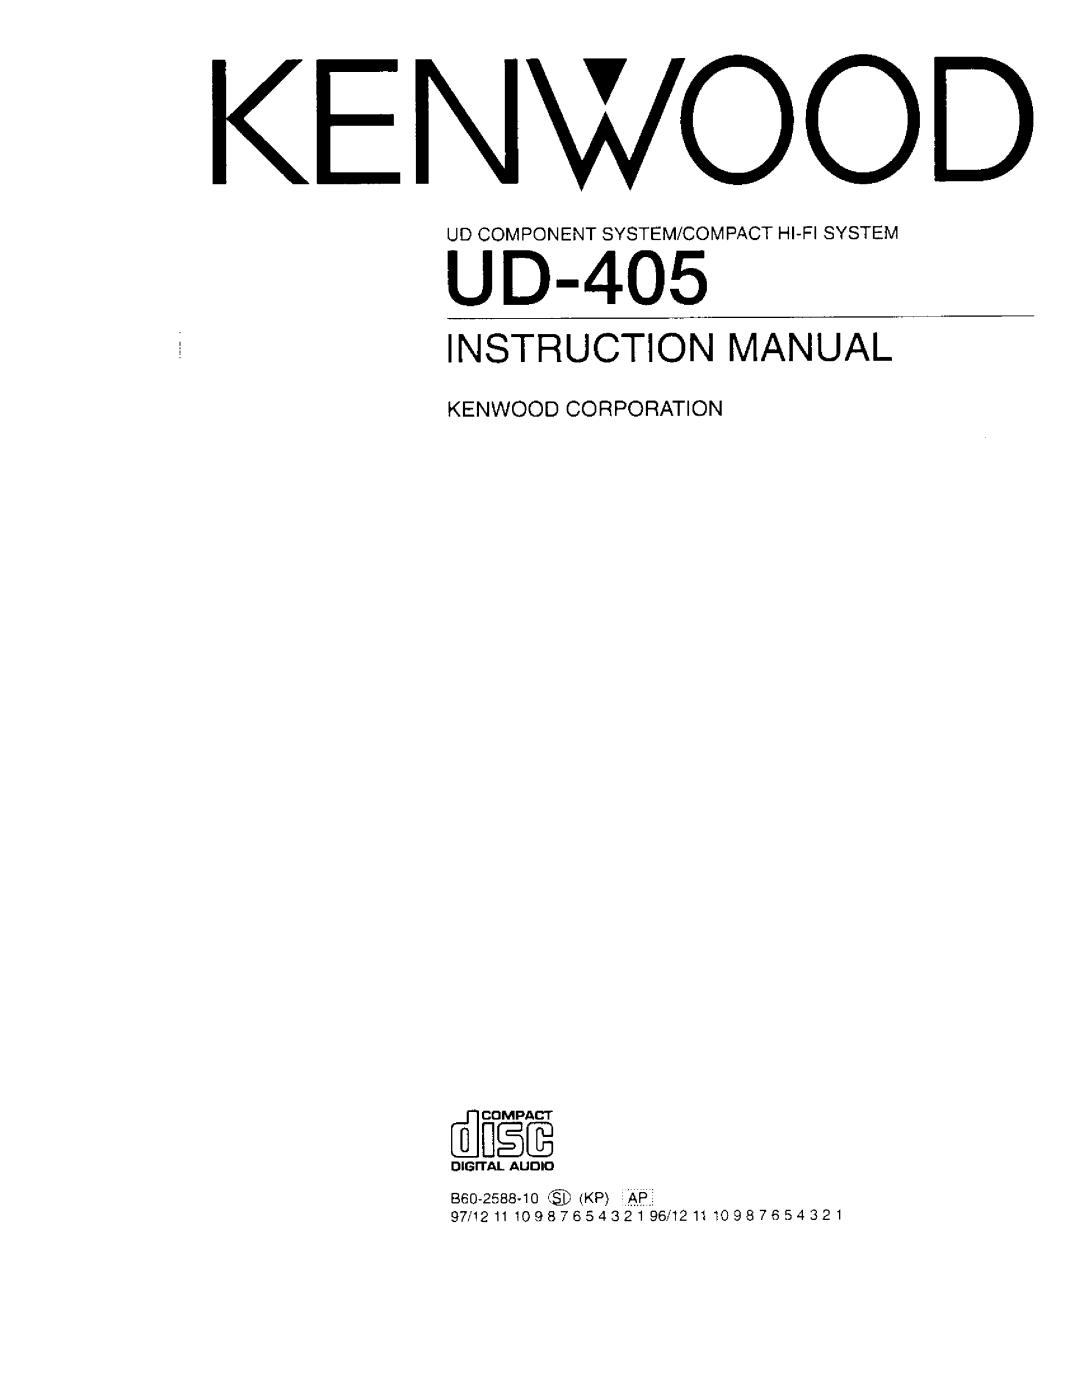 Kenwood UD-405 manual 